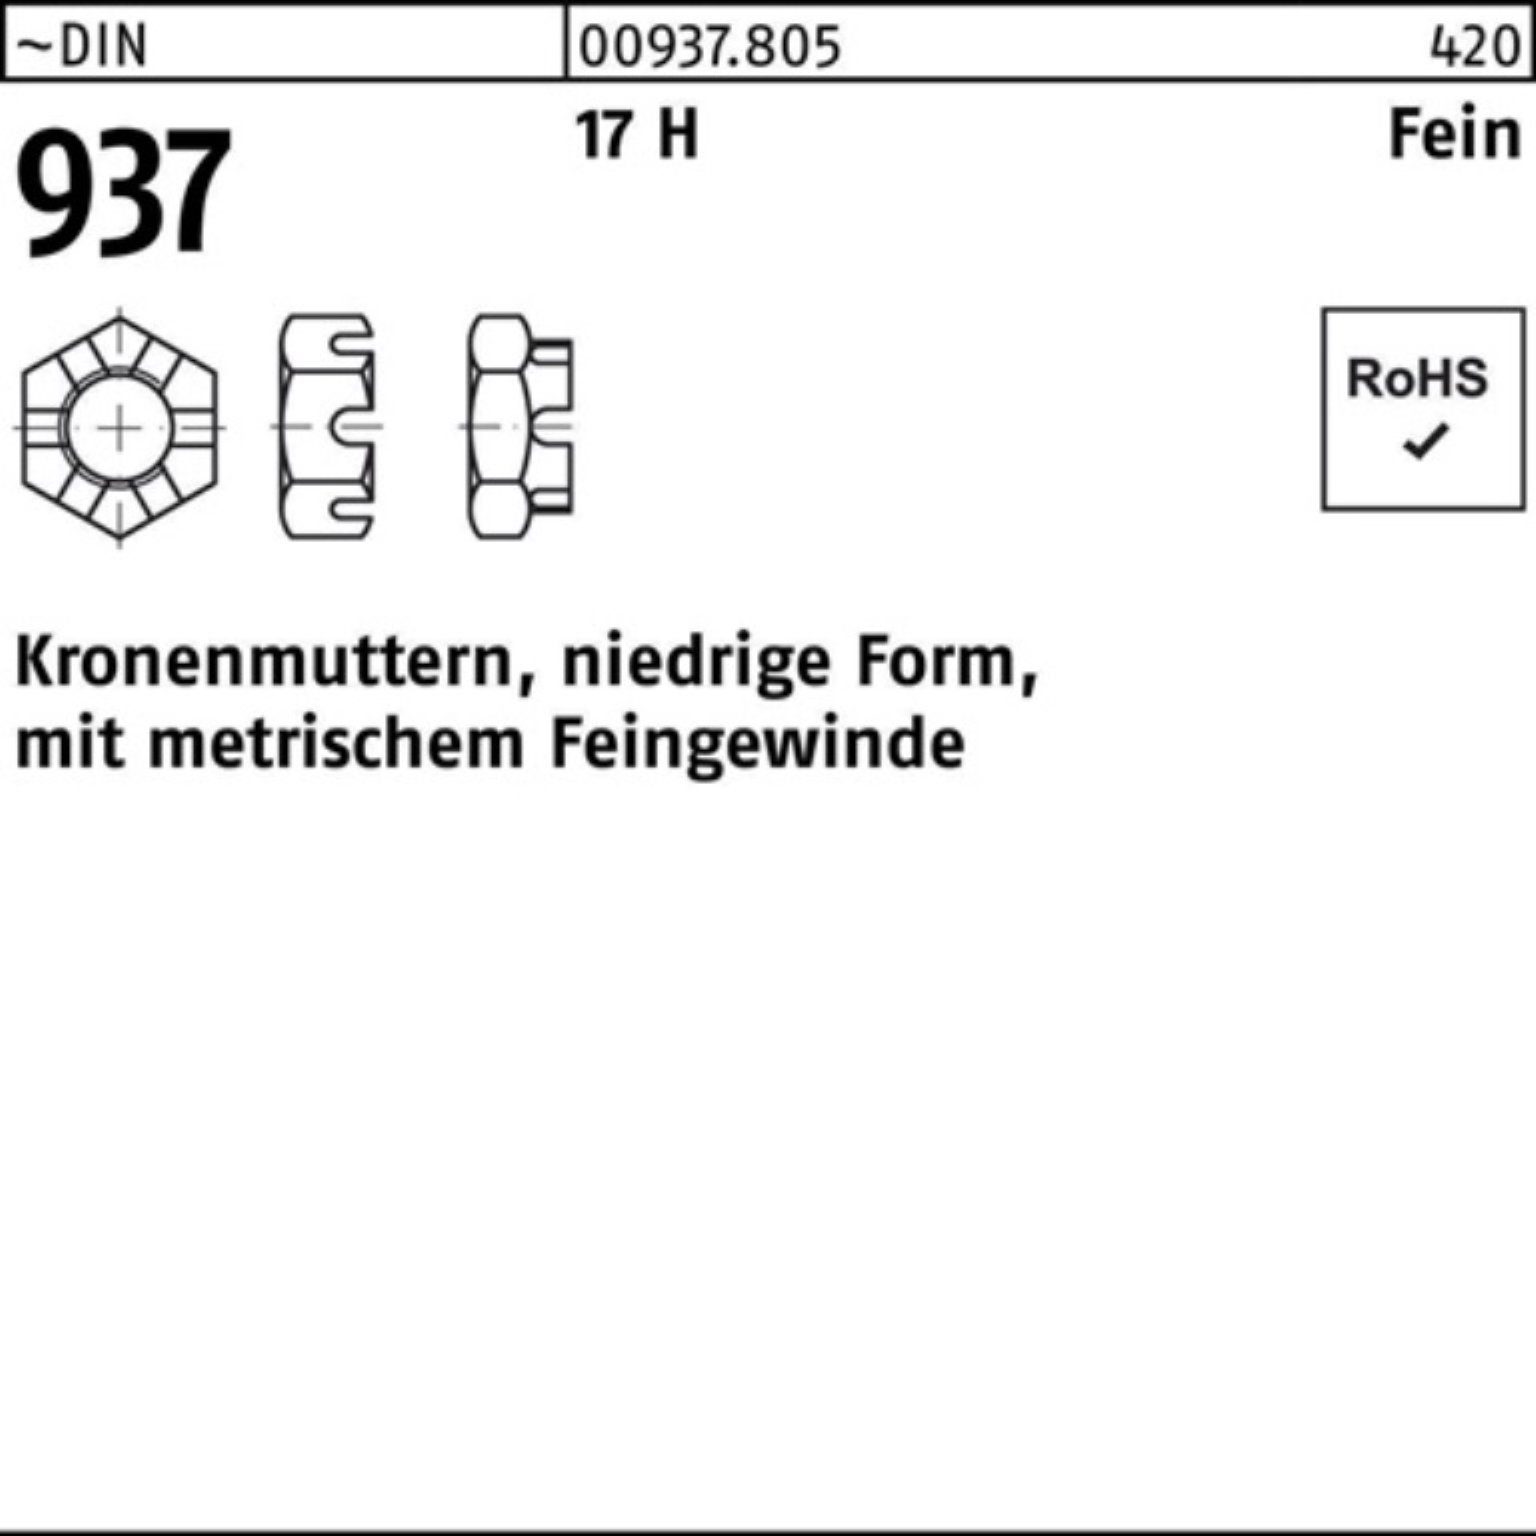 Reyher Kronenmutter 100er Pack Kronenmutter DIN 937 niedrige FormM36x 3 17 H Feingew. 1 St